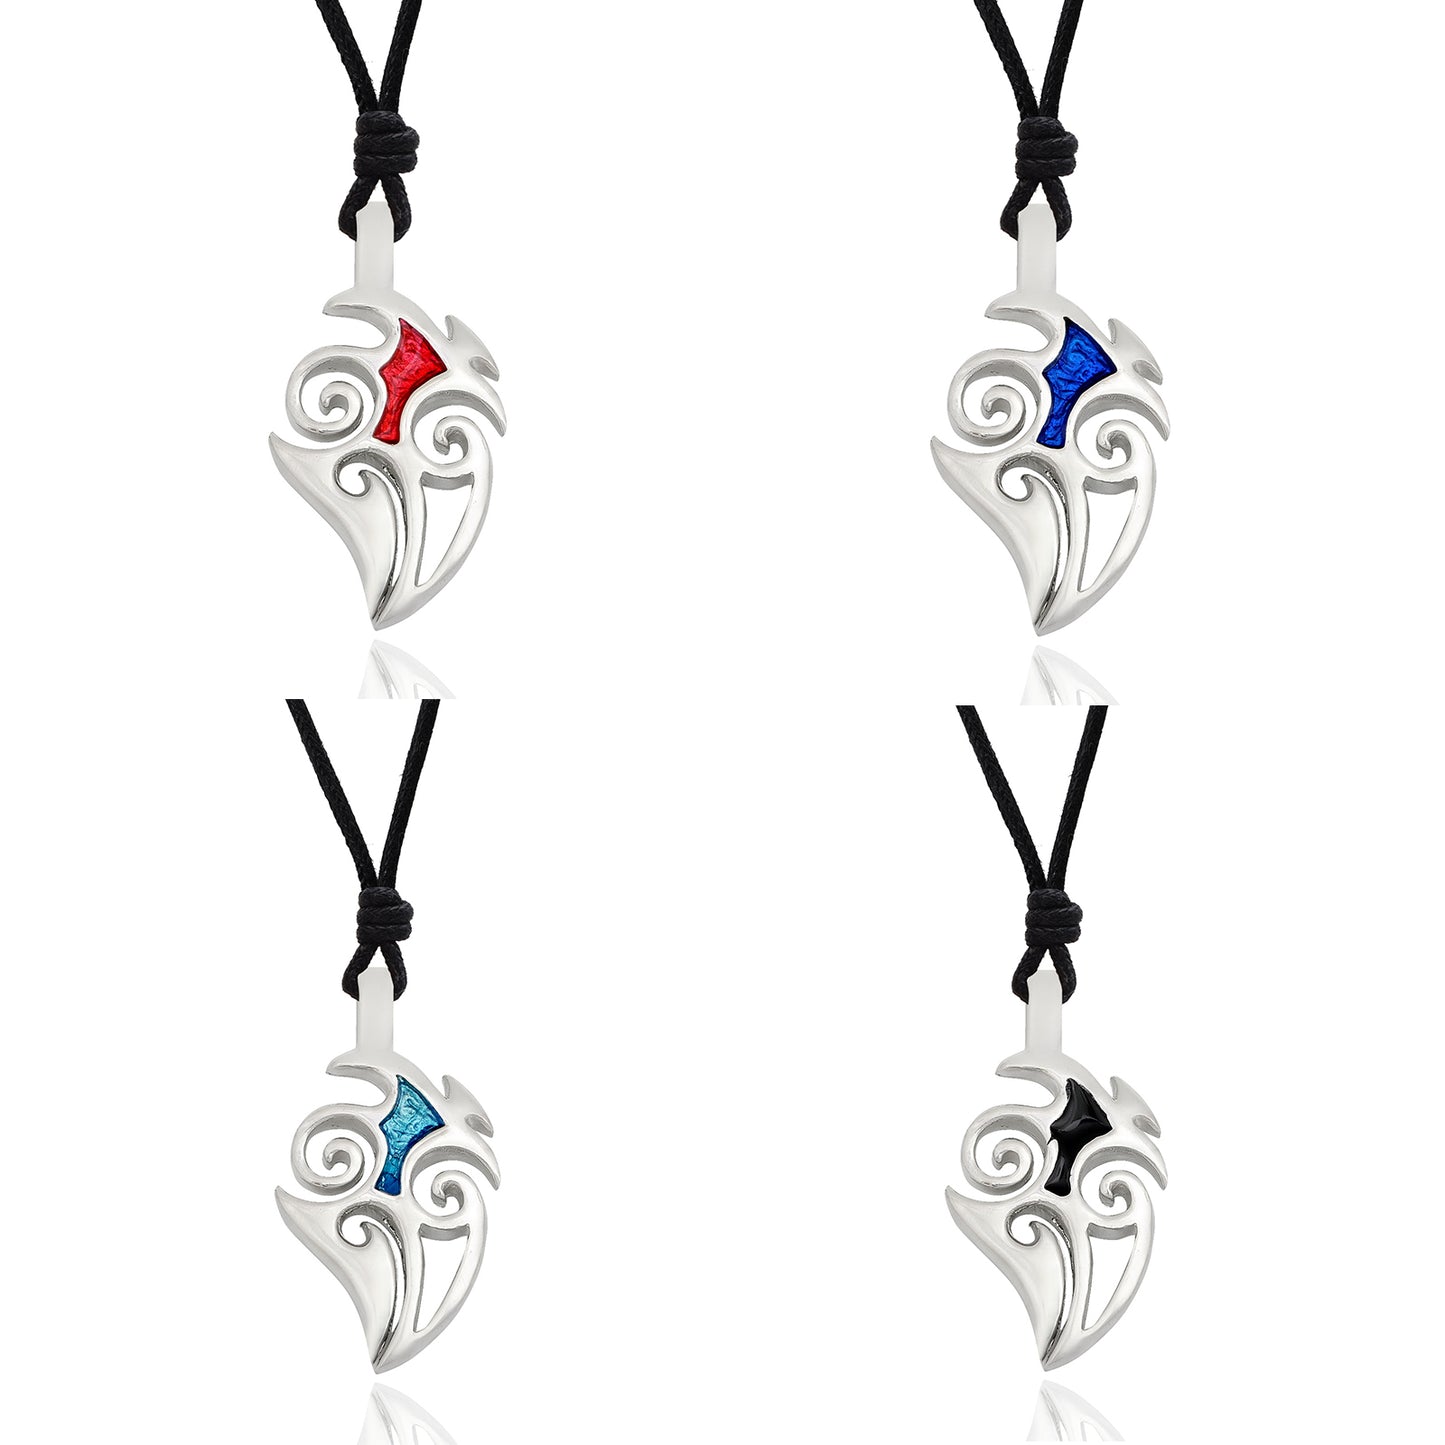 Maori Tatoo Design Silver Pewter Charm Necklace Pendant Jewelry